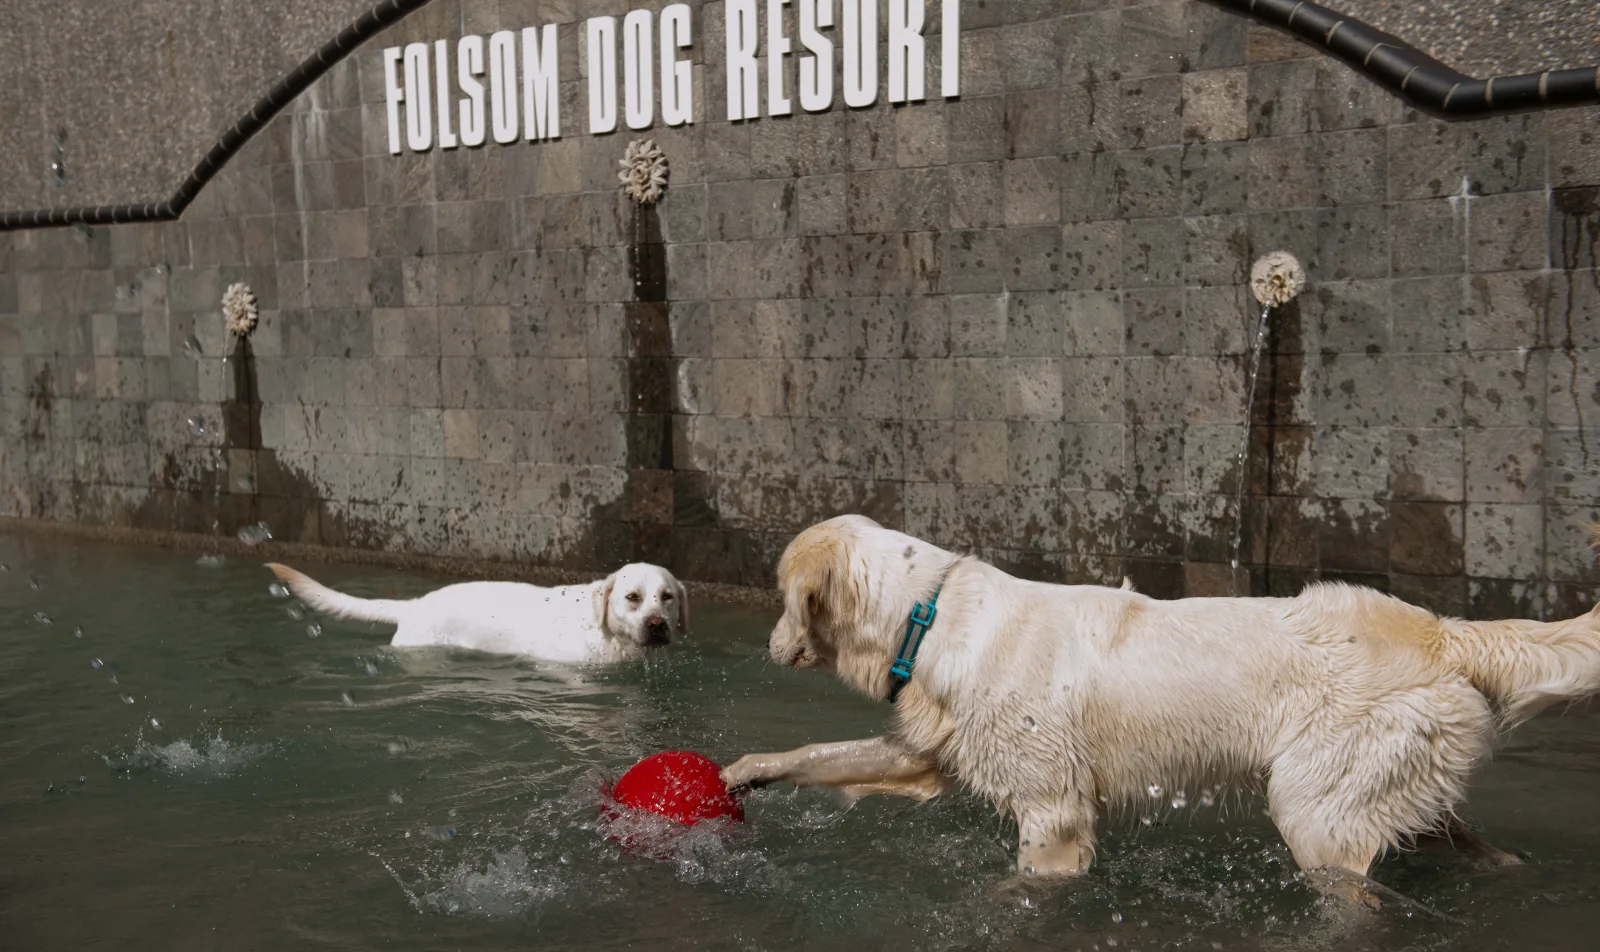 Folsom Dog Resort water parkl